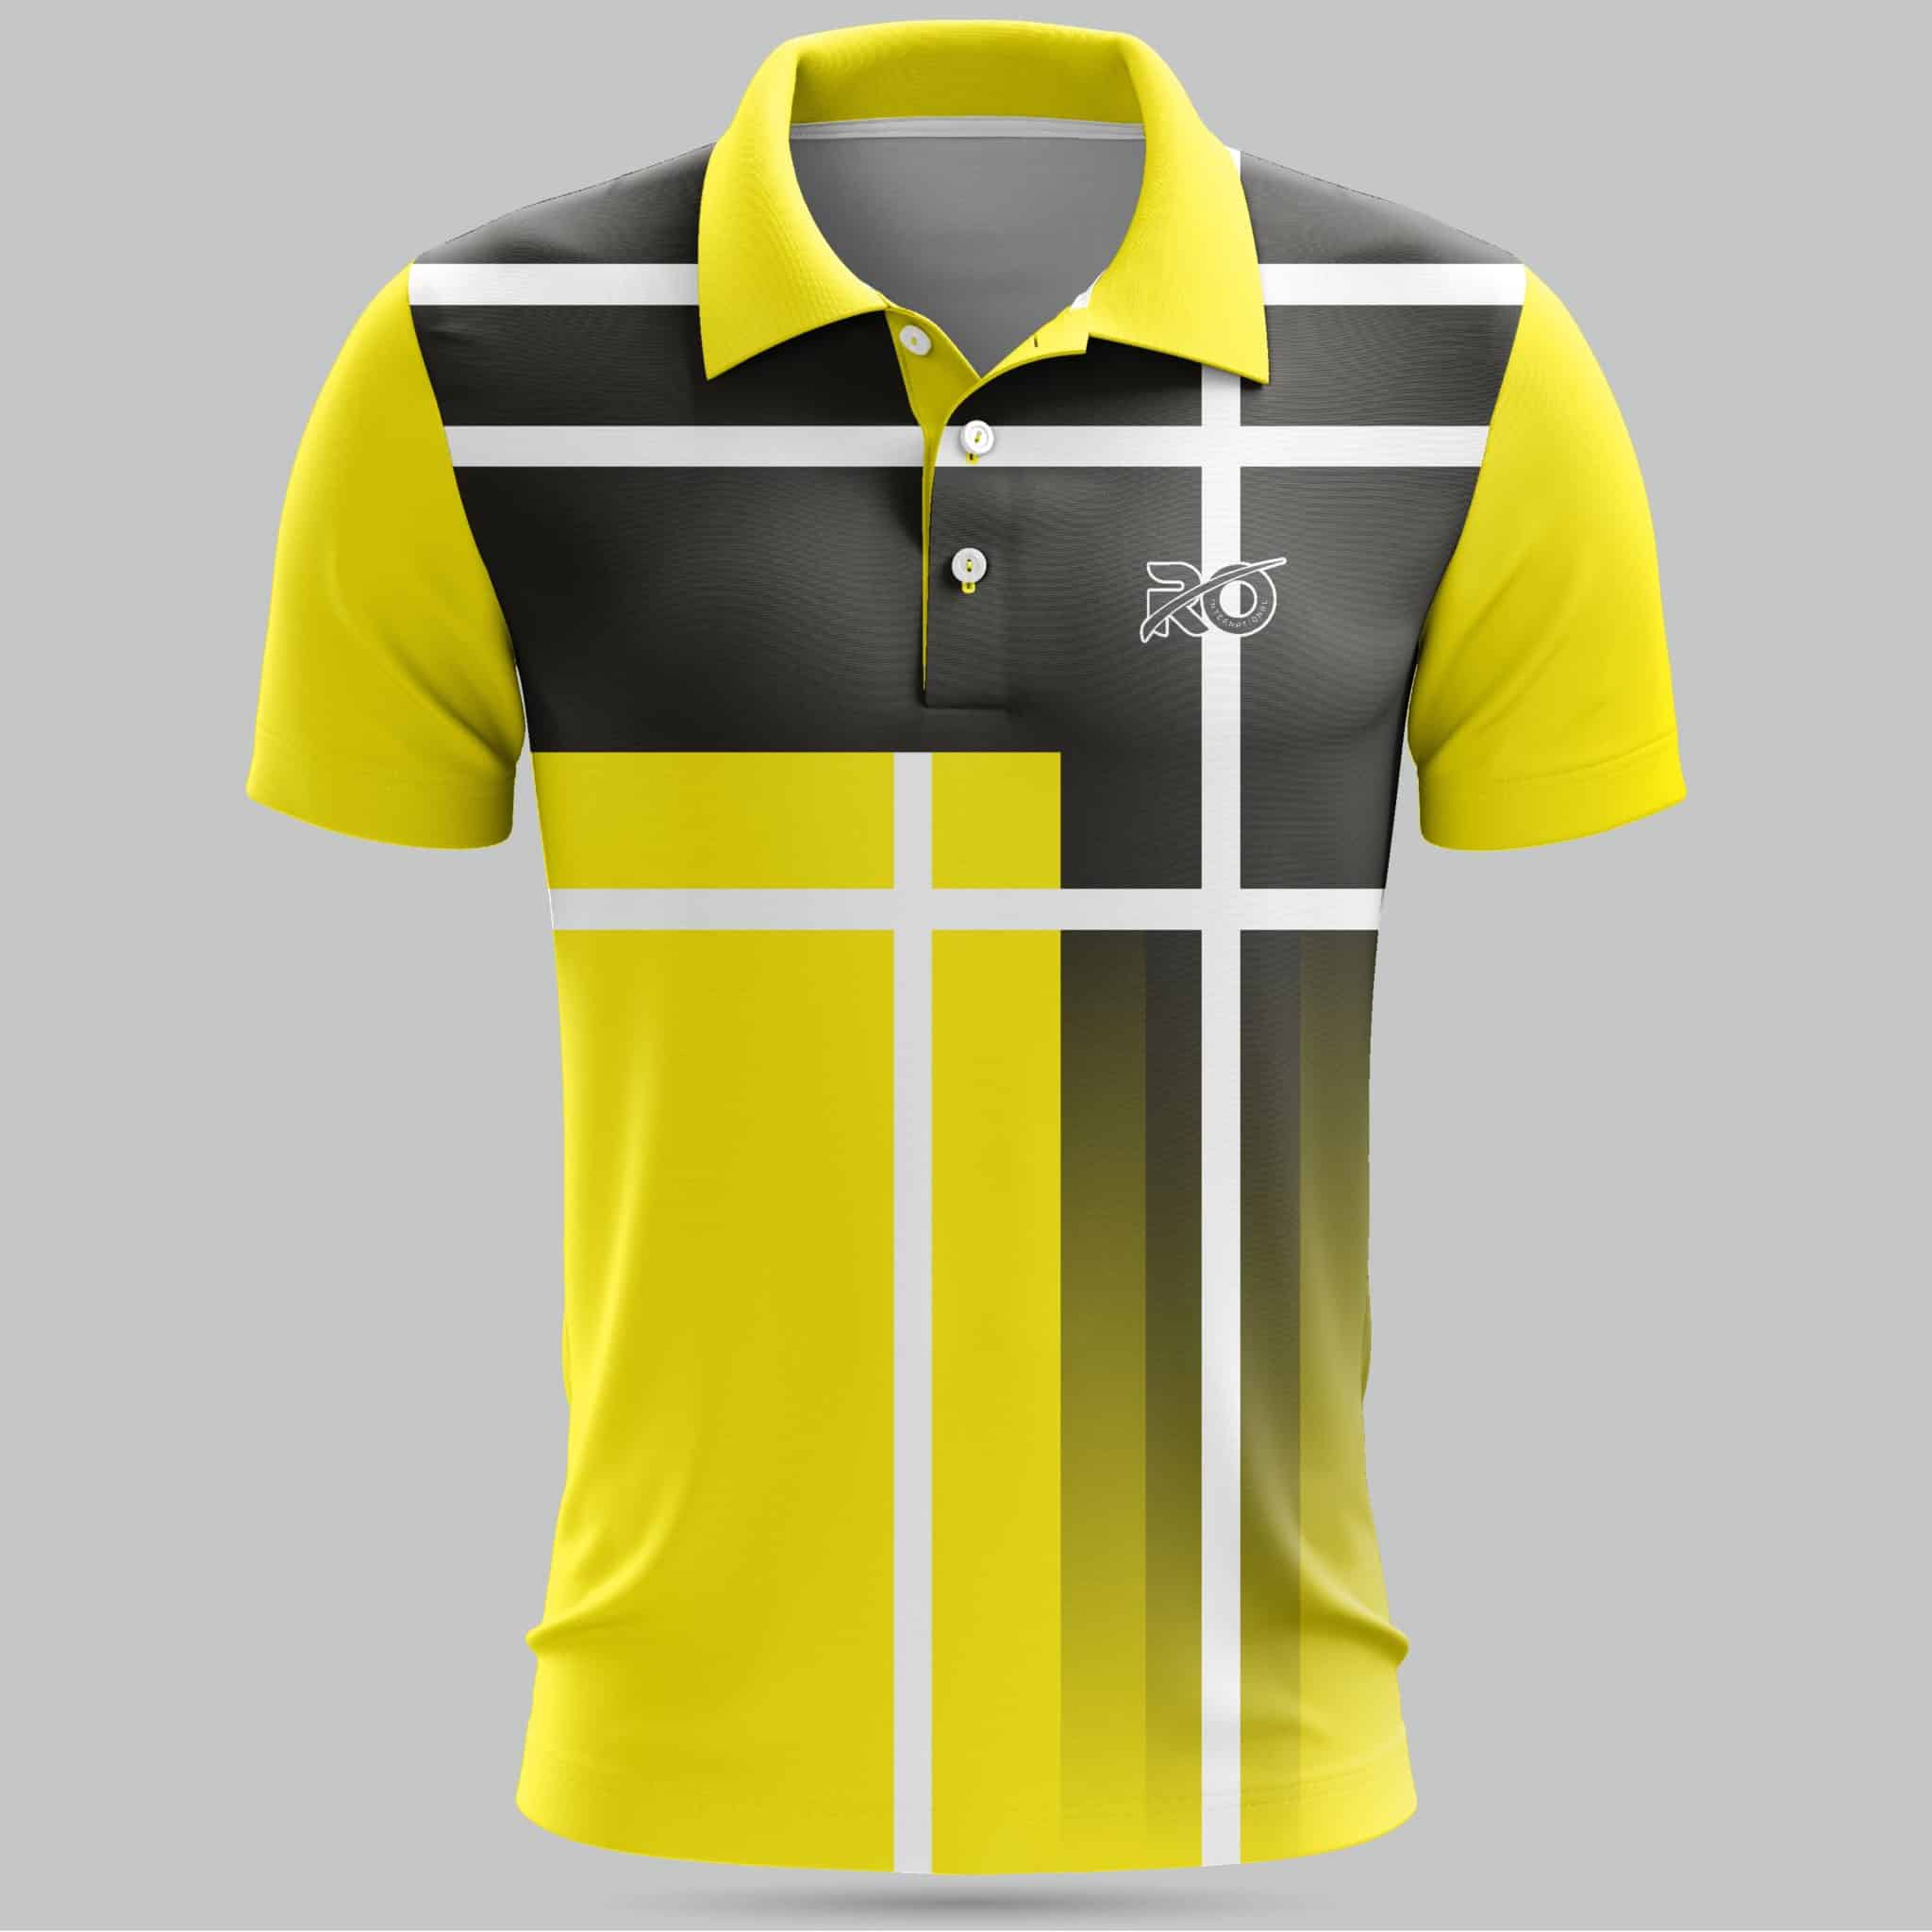 Ro Cricket Jersey Yellow Black - RO International